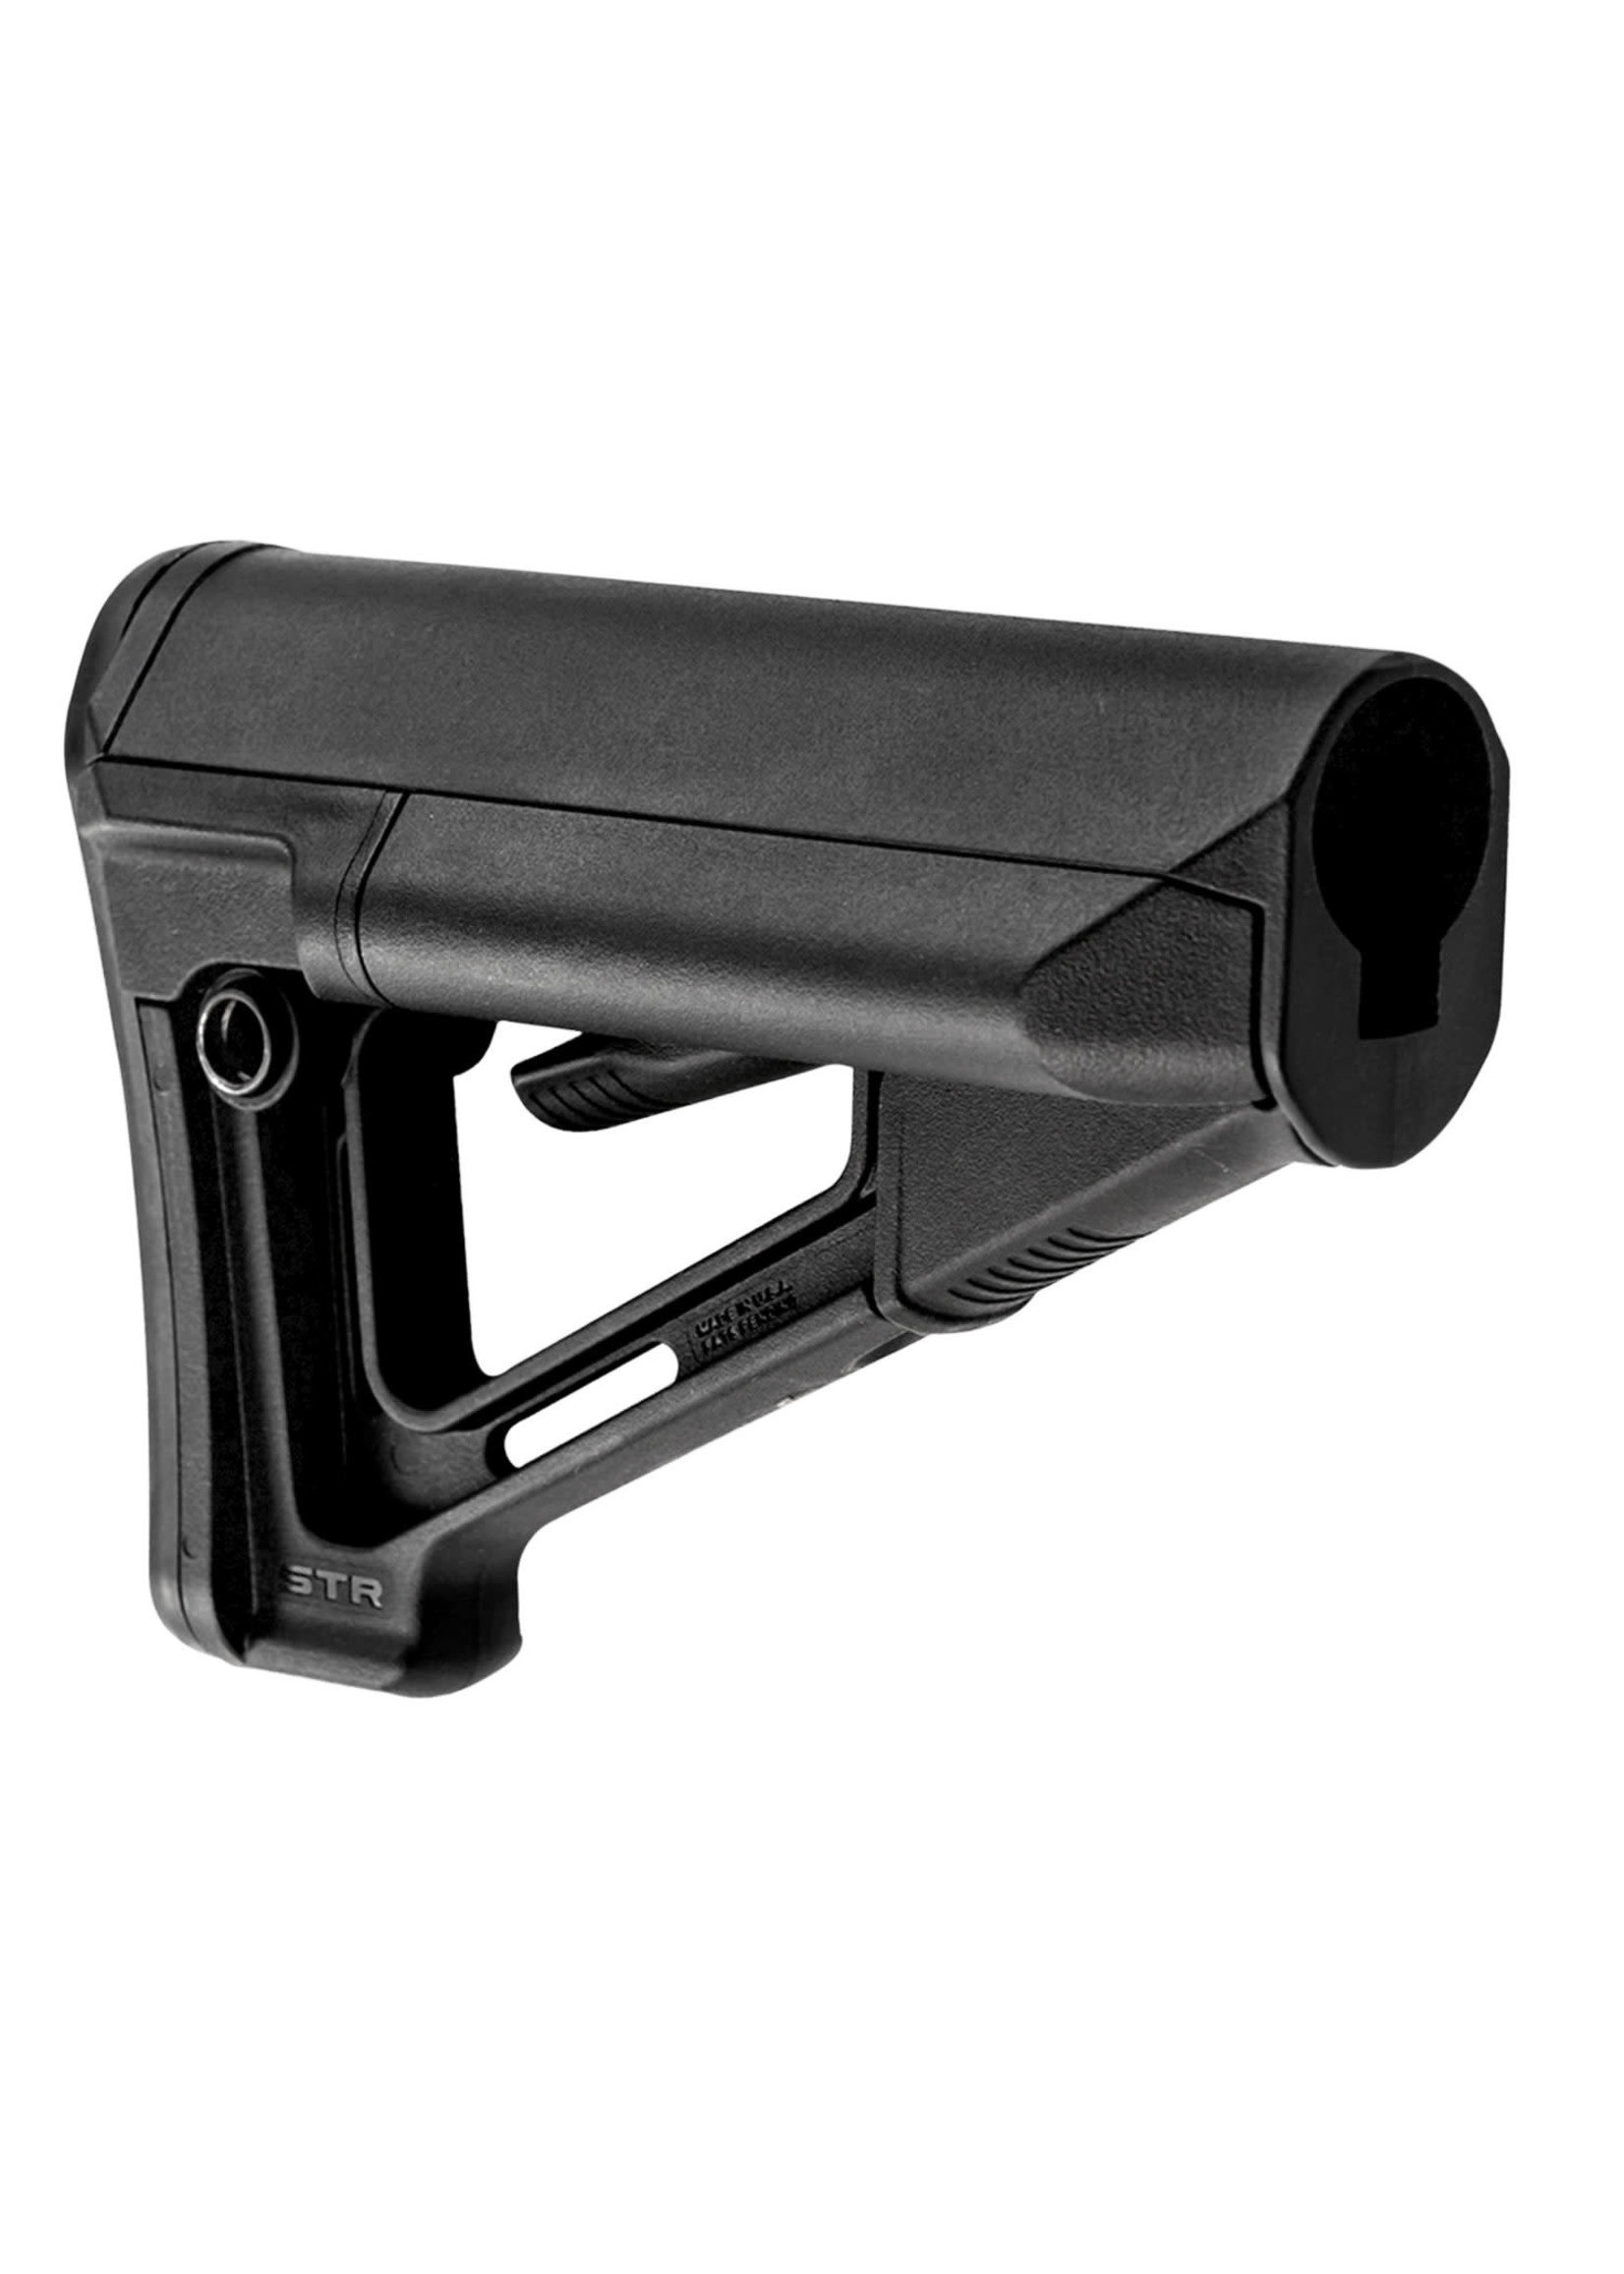 Magpul Magpul STR Carbine Stock - MIL-SPEC - Black, for AR15, M16, M4